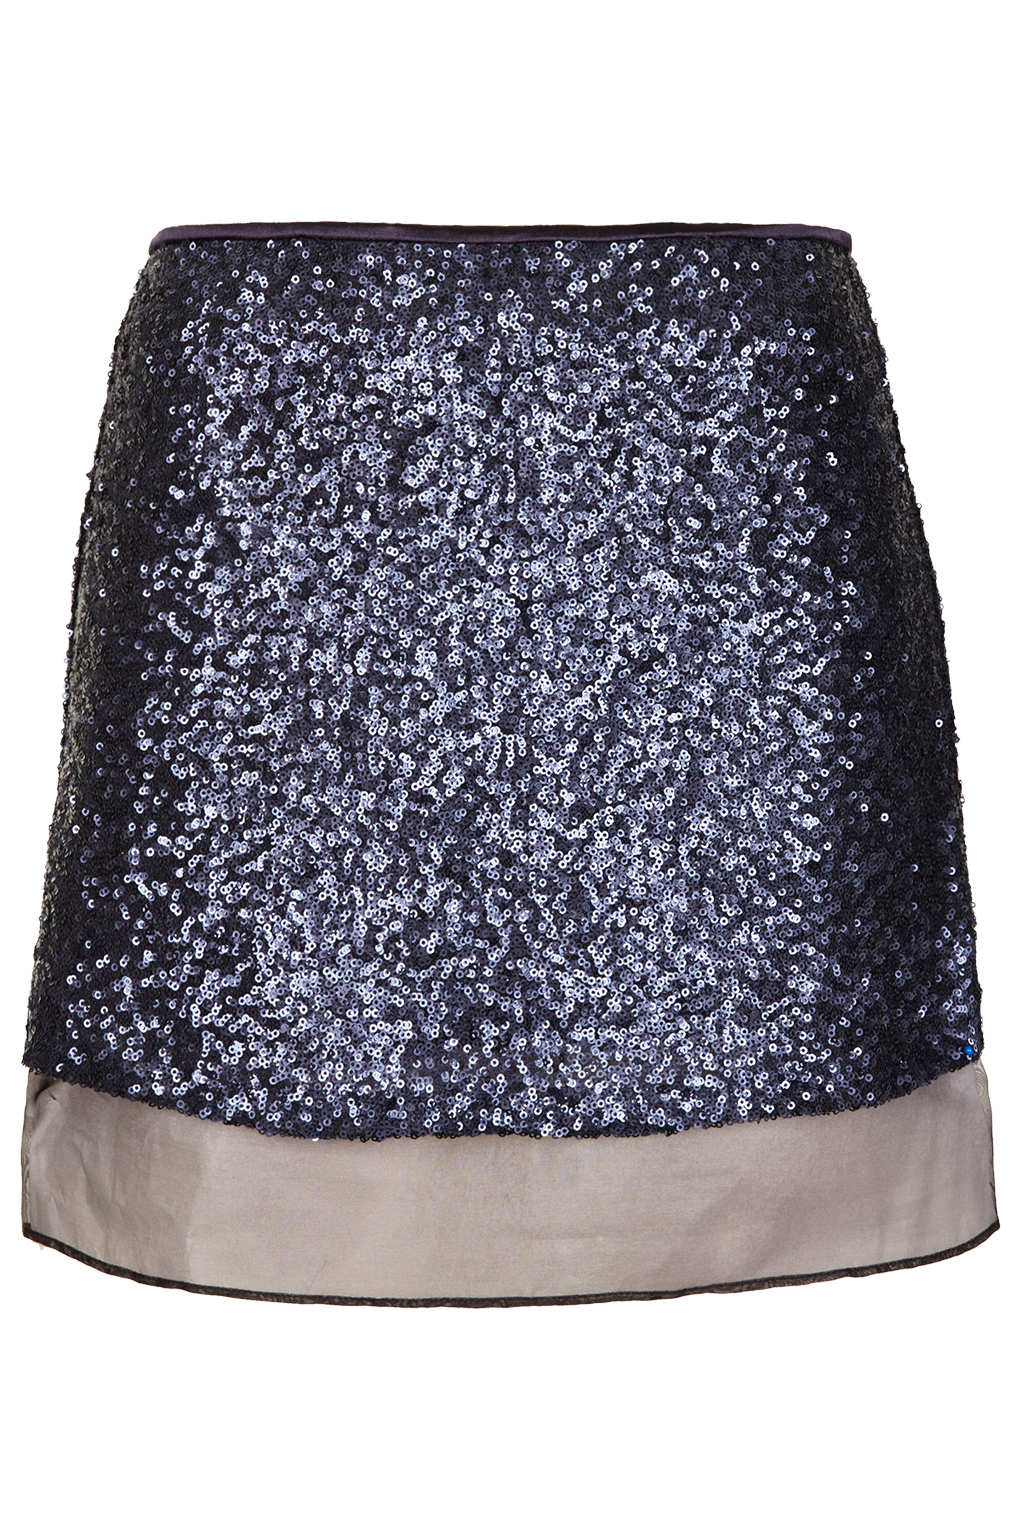 Lyst - Topshop Sequin Organza Hem Mini Skirt in Blue